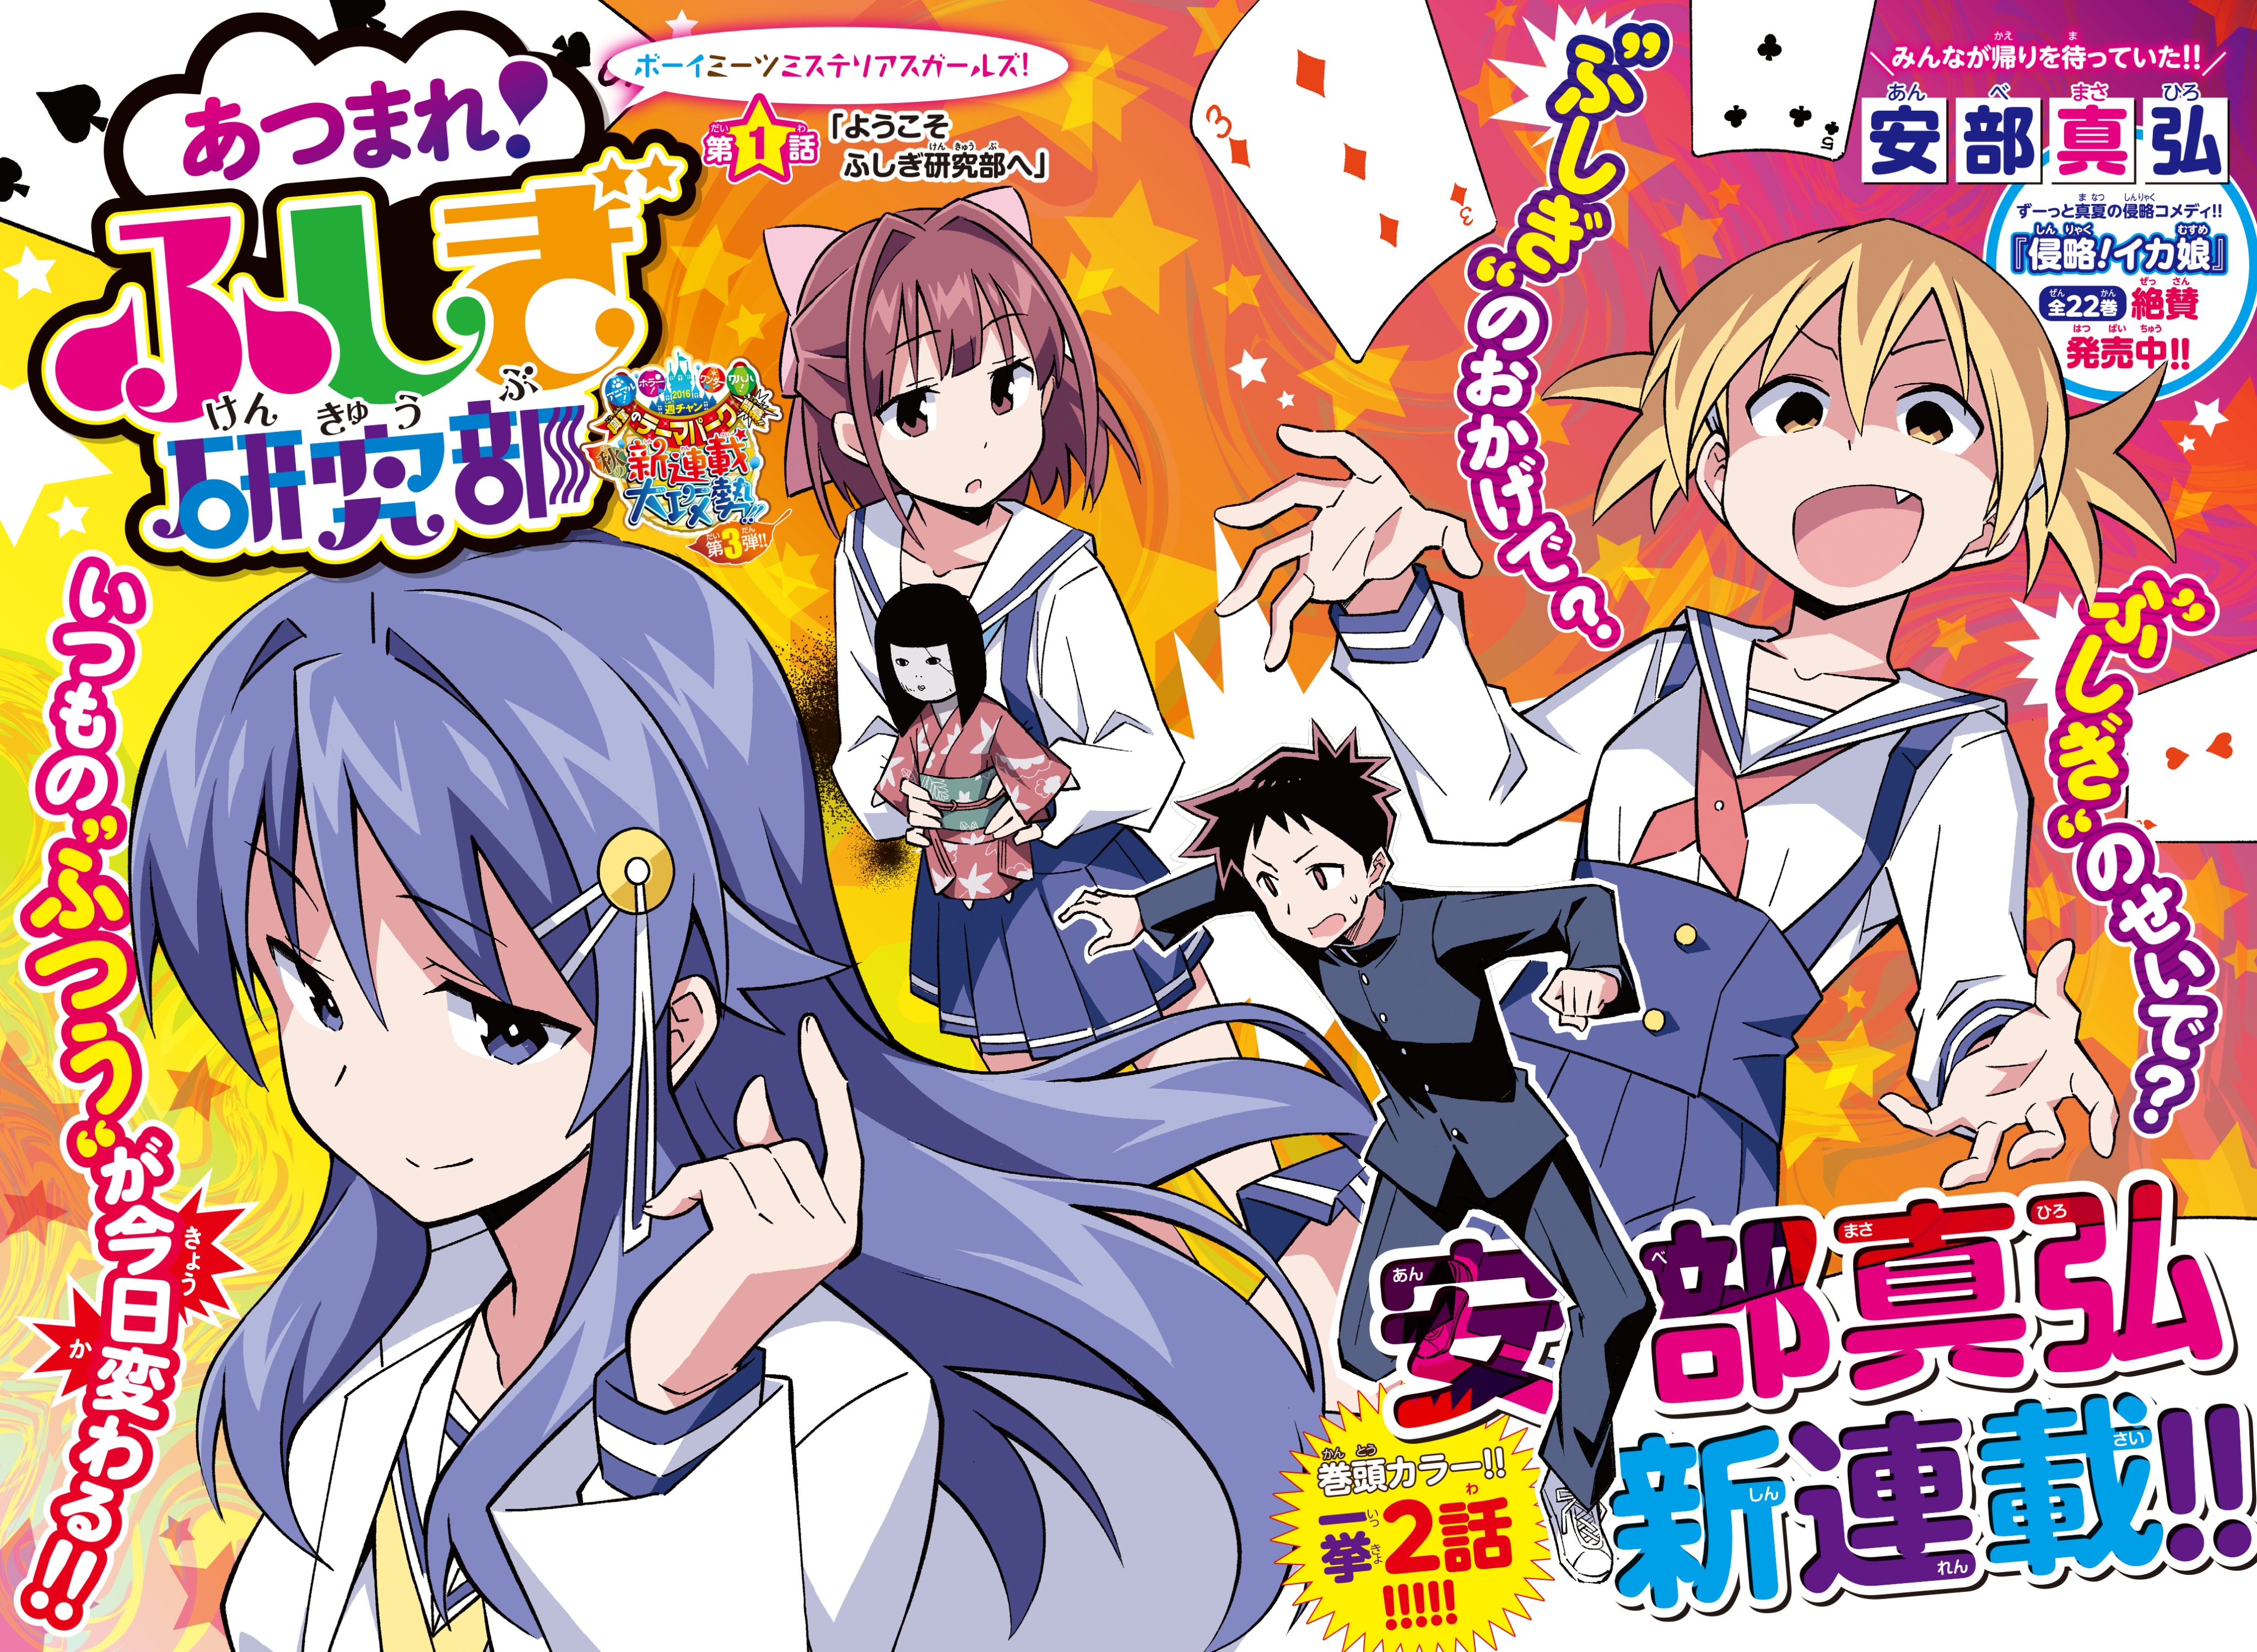 Animebu!-The Anime Club for Otaku - Three Rivers Public Library